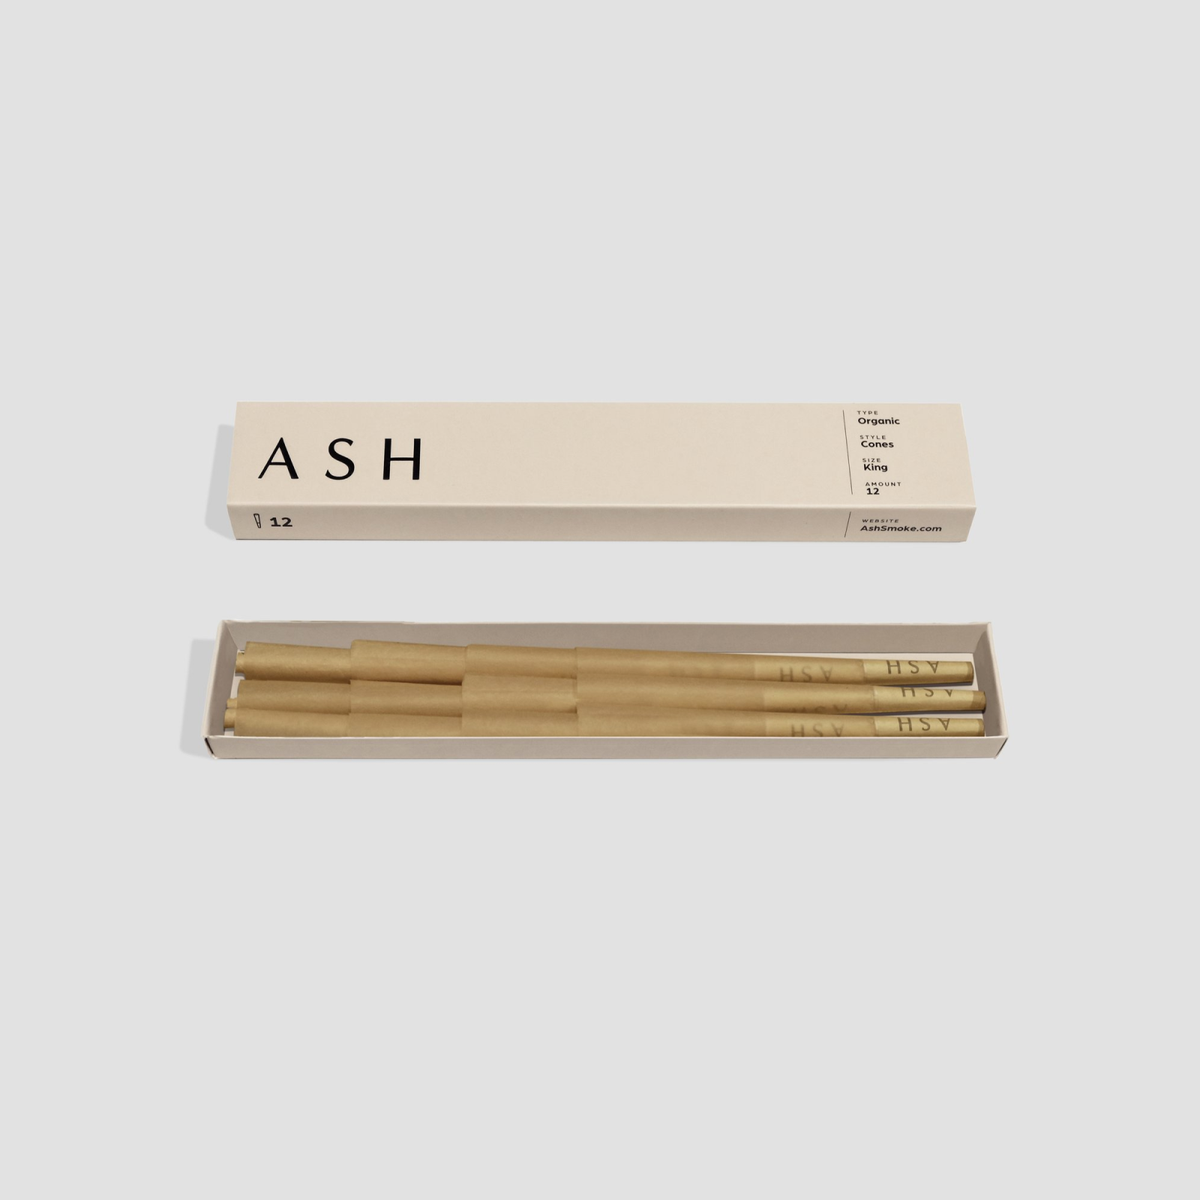 ASH Pre-rolled Cones | Organic | 12 count